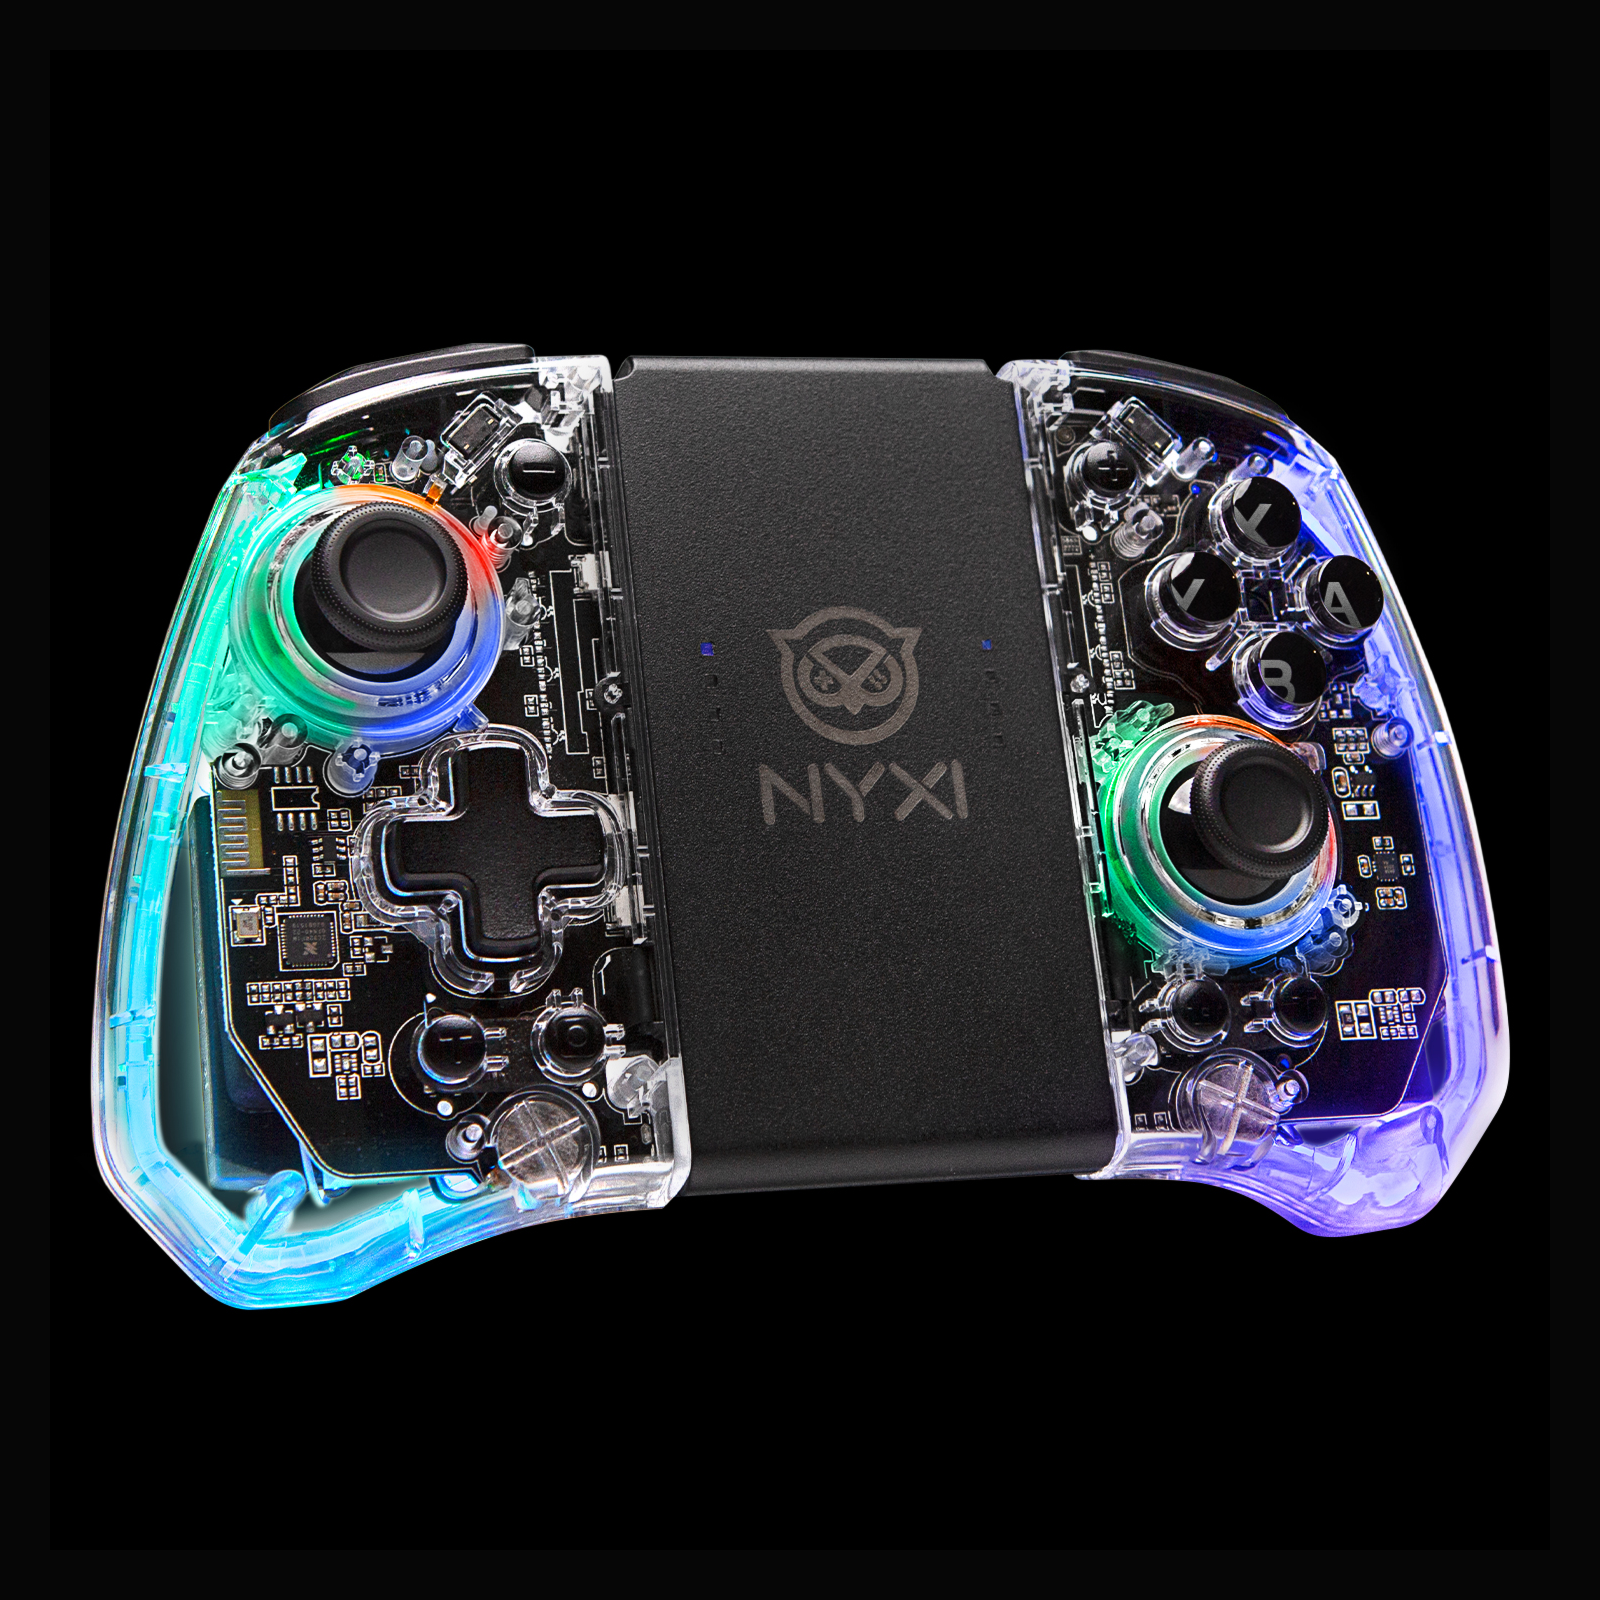 NYXI Hyperion Meteor Light Wireless Joy-pad Controller Nintendo Switch  LED/OLED